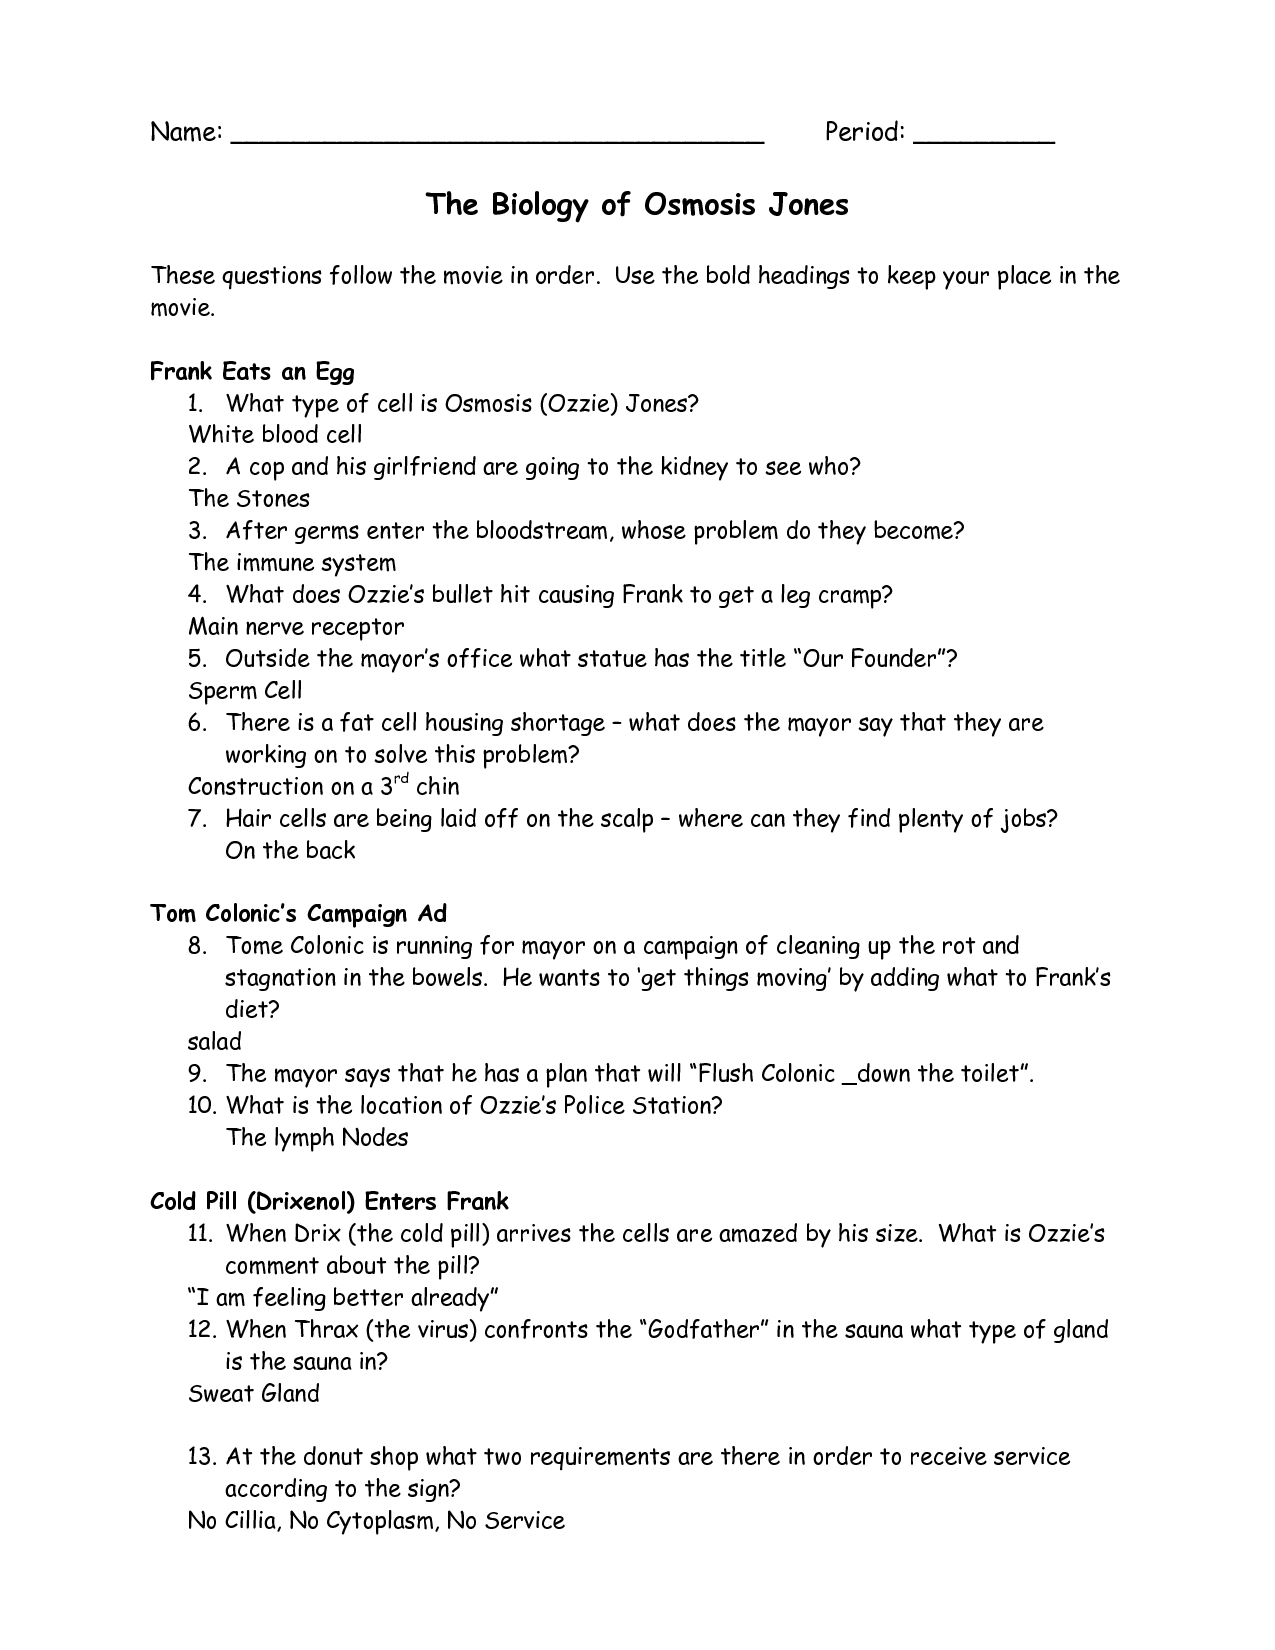 Osmosis Jones Worksheet Answer Key Image